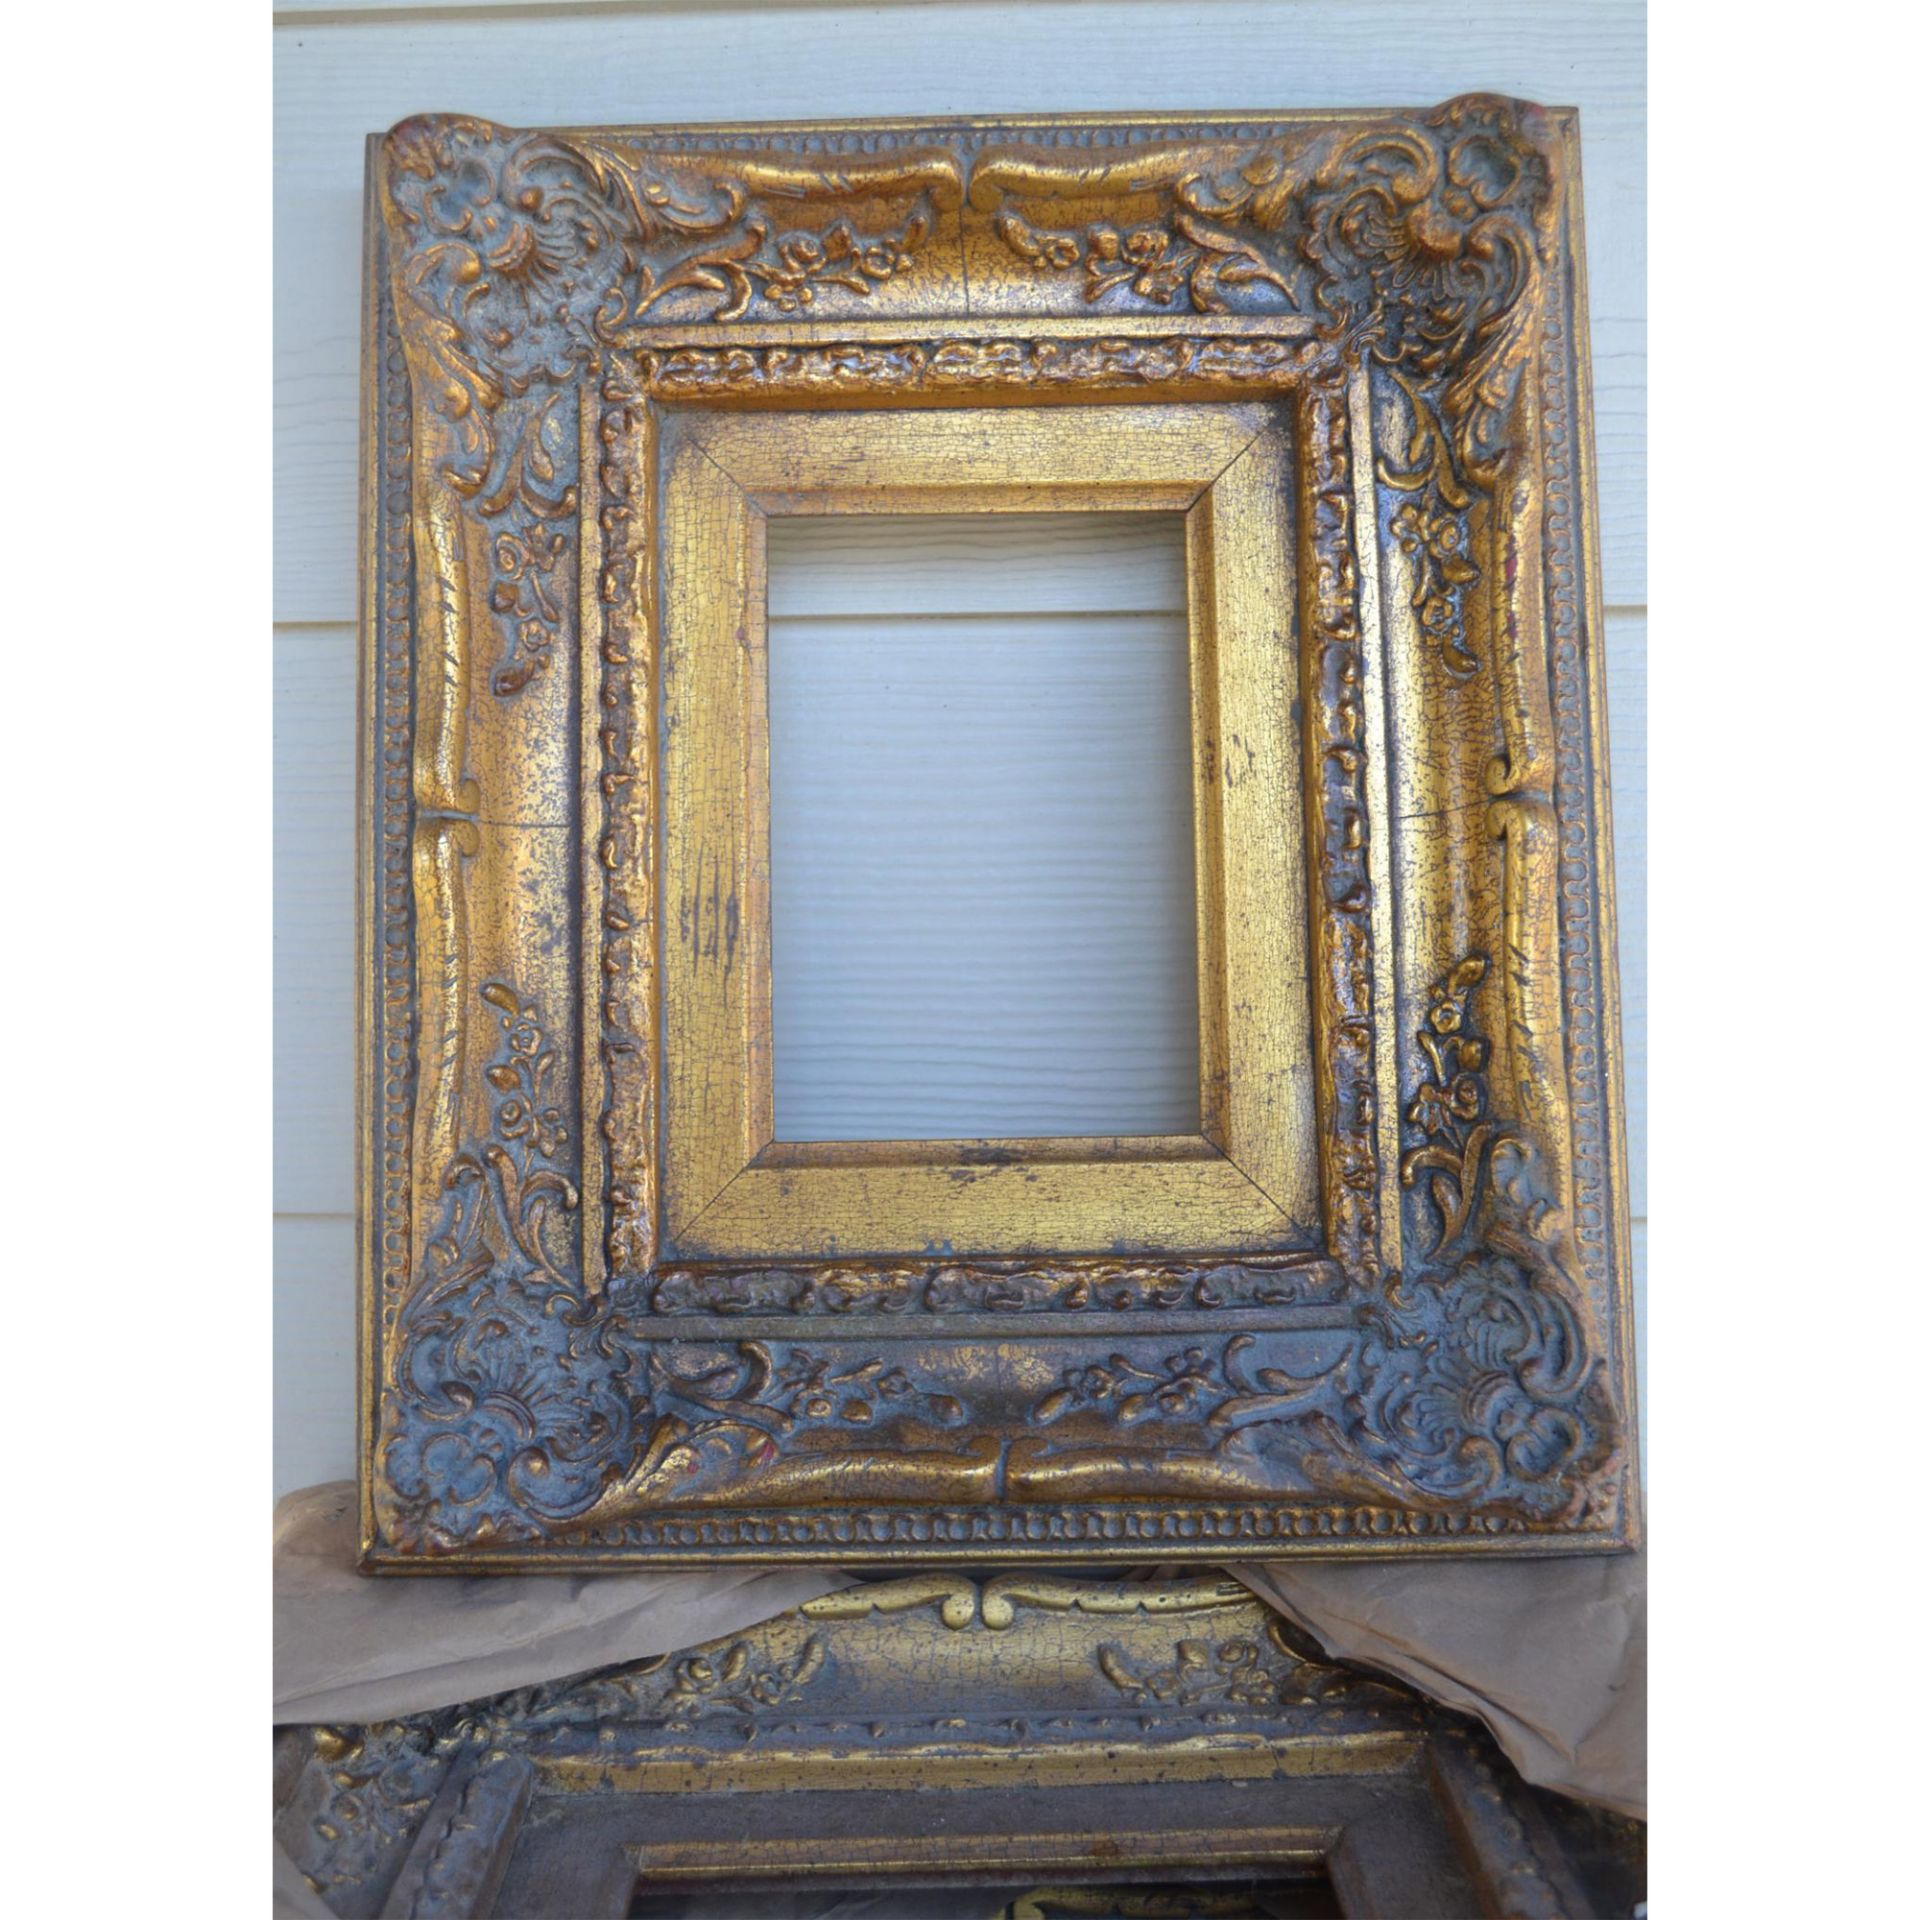 Seven Gold Ornate Vertical Picture Frames, 14.25"H, - 7 Pcs, - Image 2 of 2